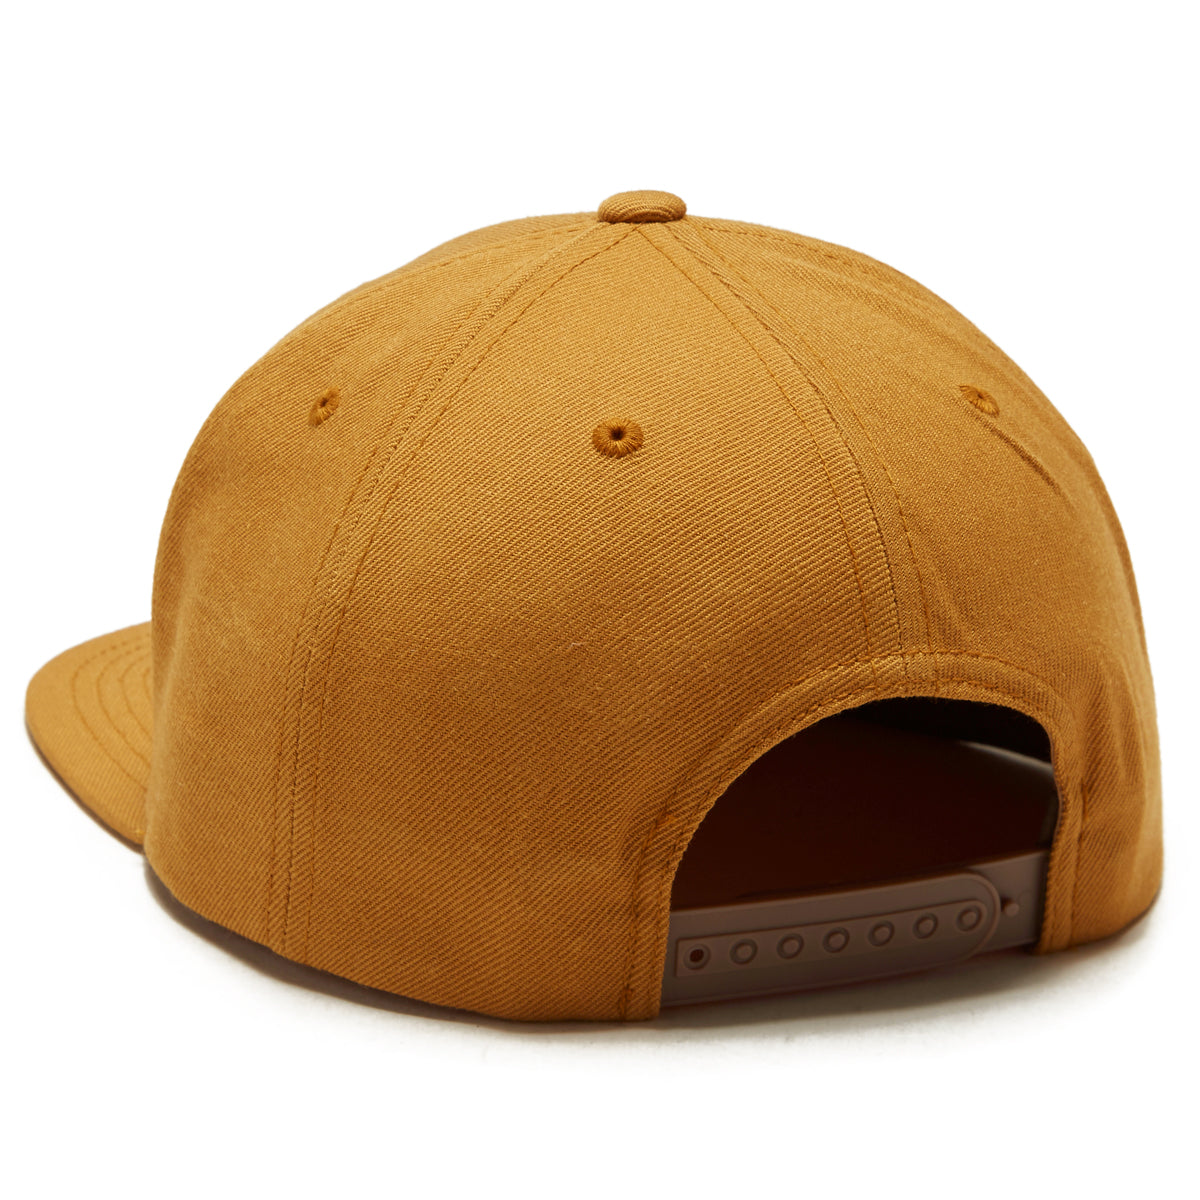 Brixton Regal Mp Snapback Hat - Golden Brown image 2